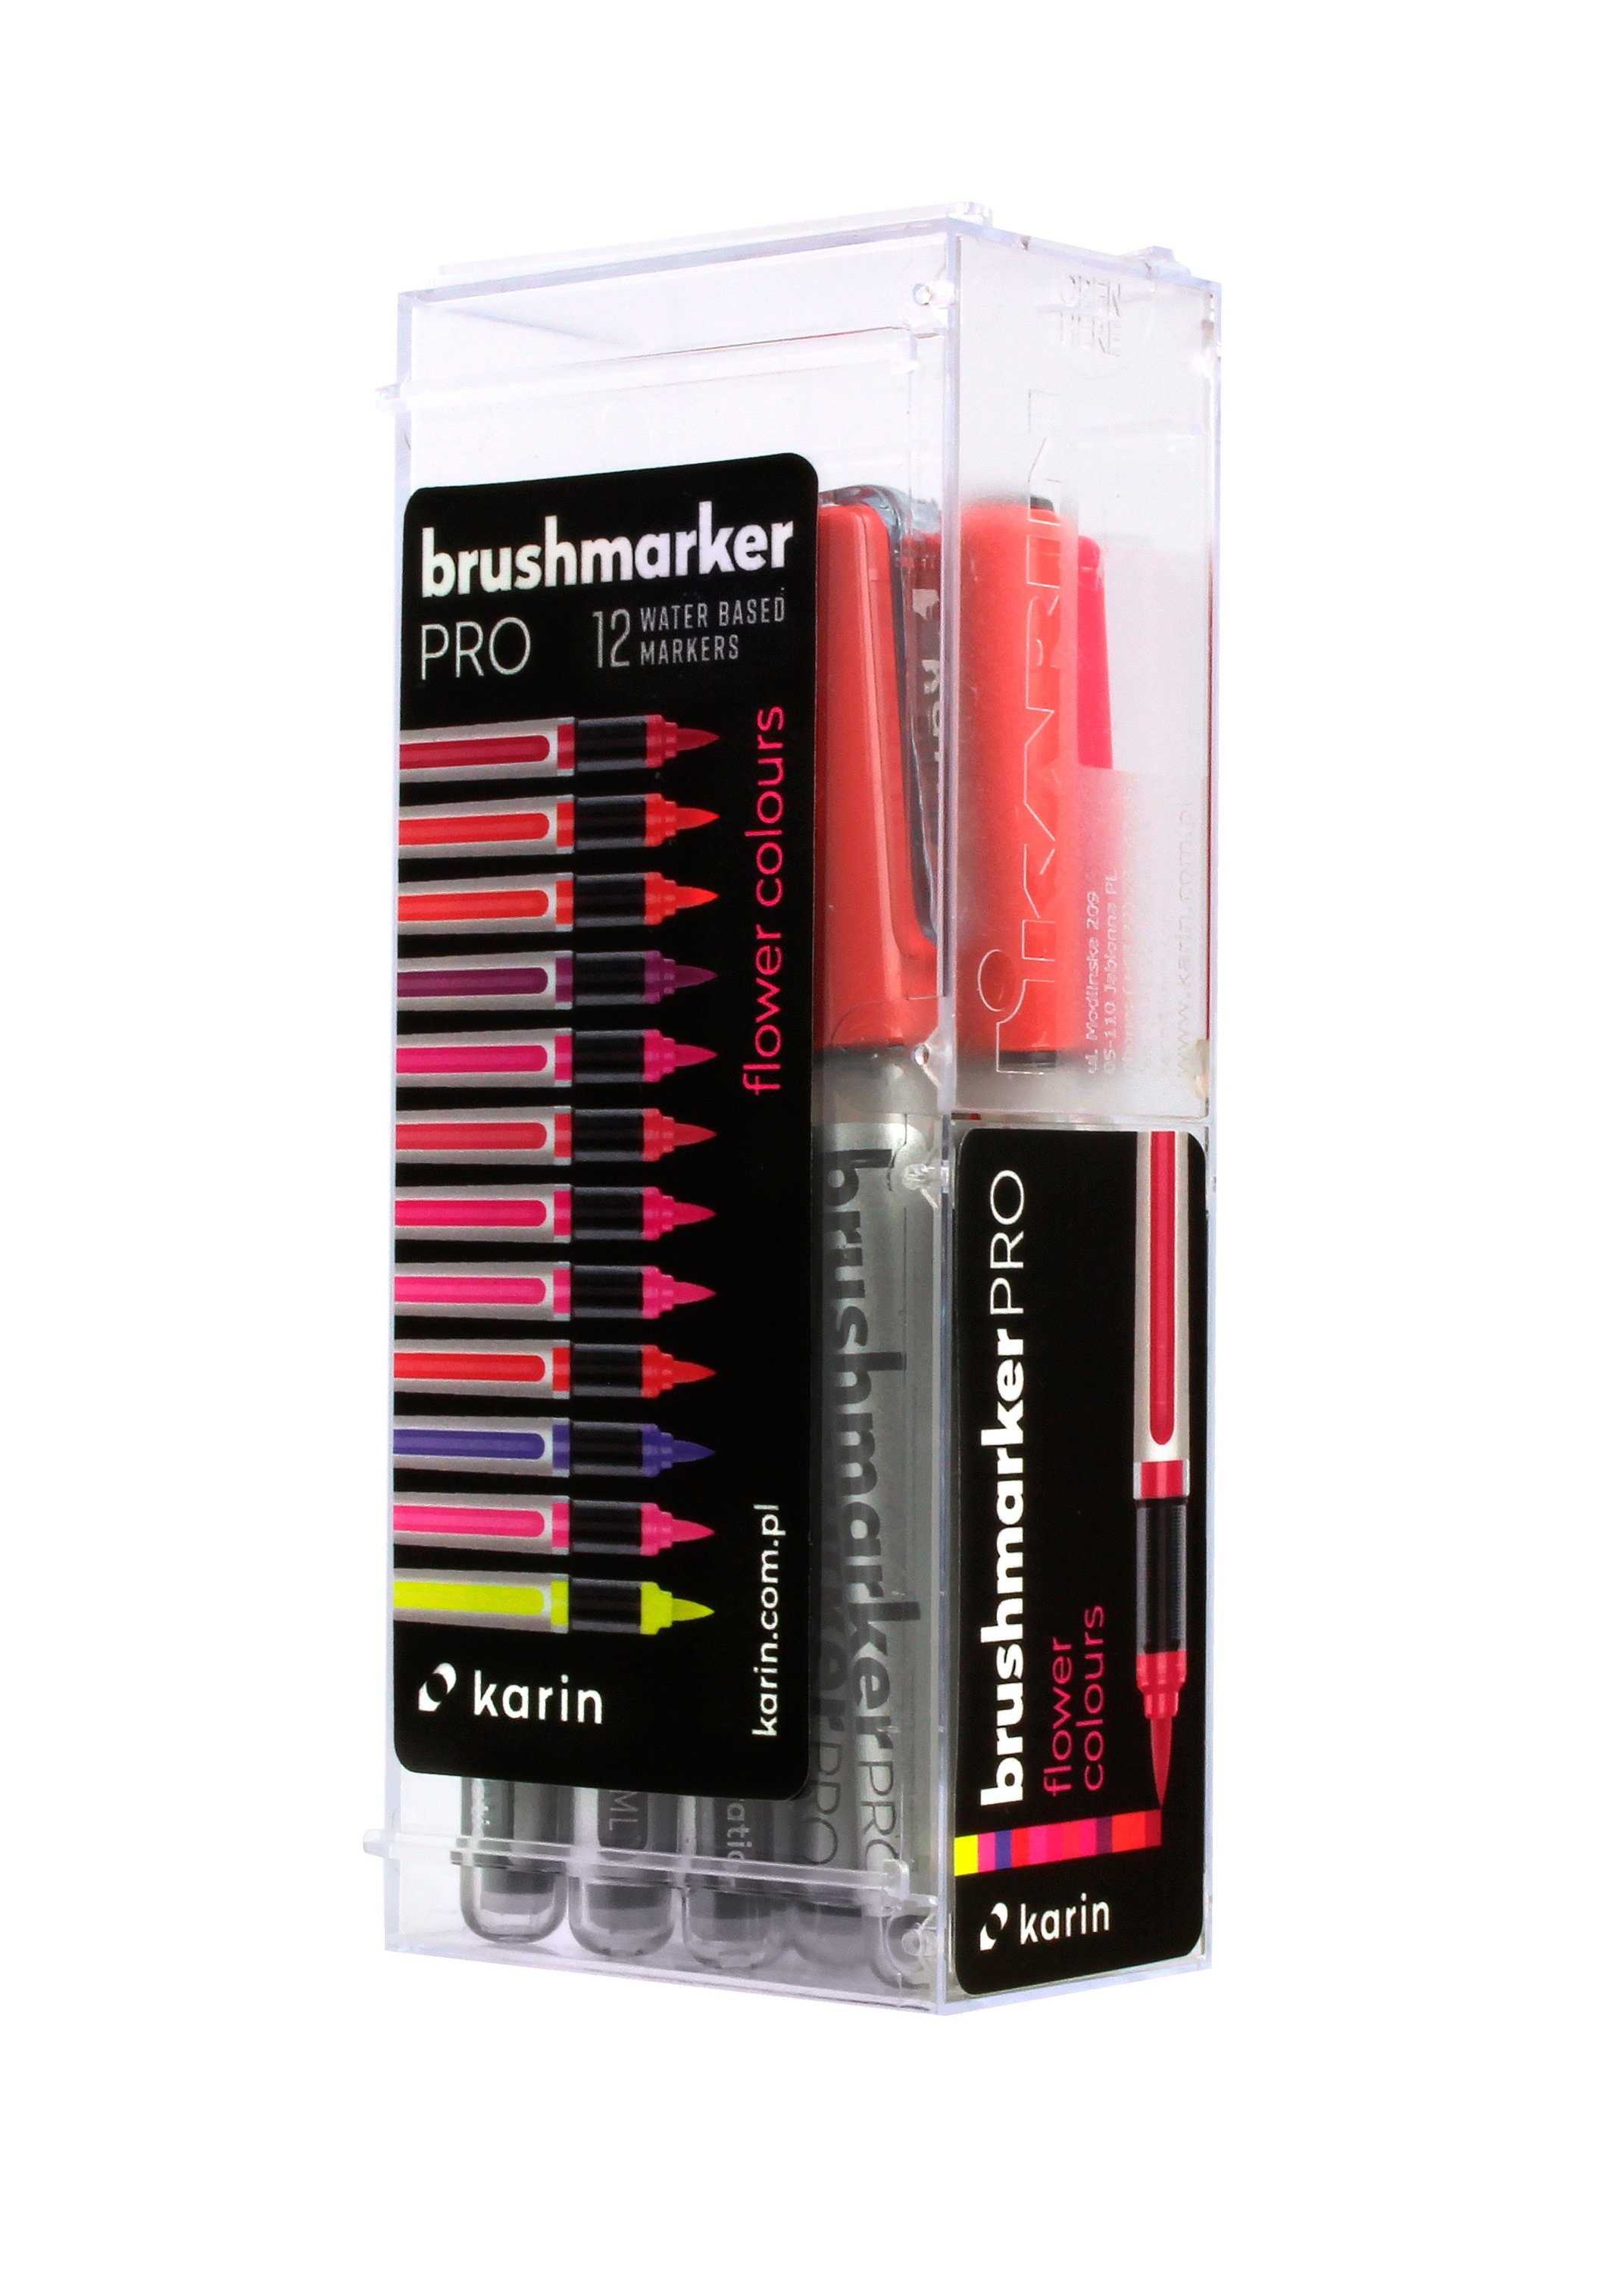 PRO Farben Brushmarker Pinselstift Rot 12 Set, karin